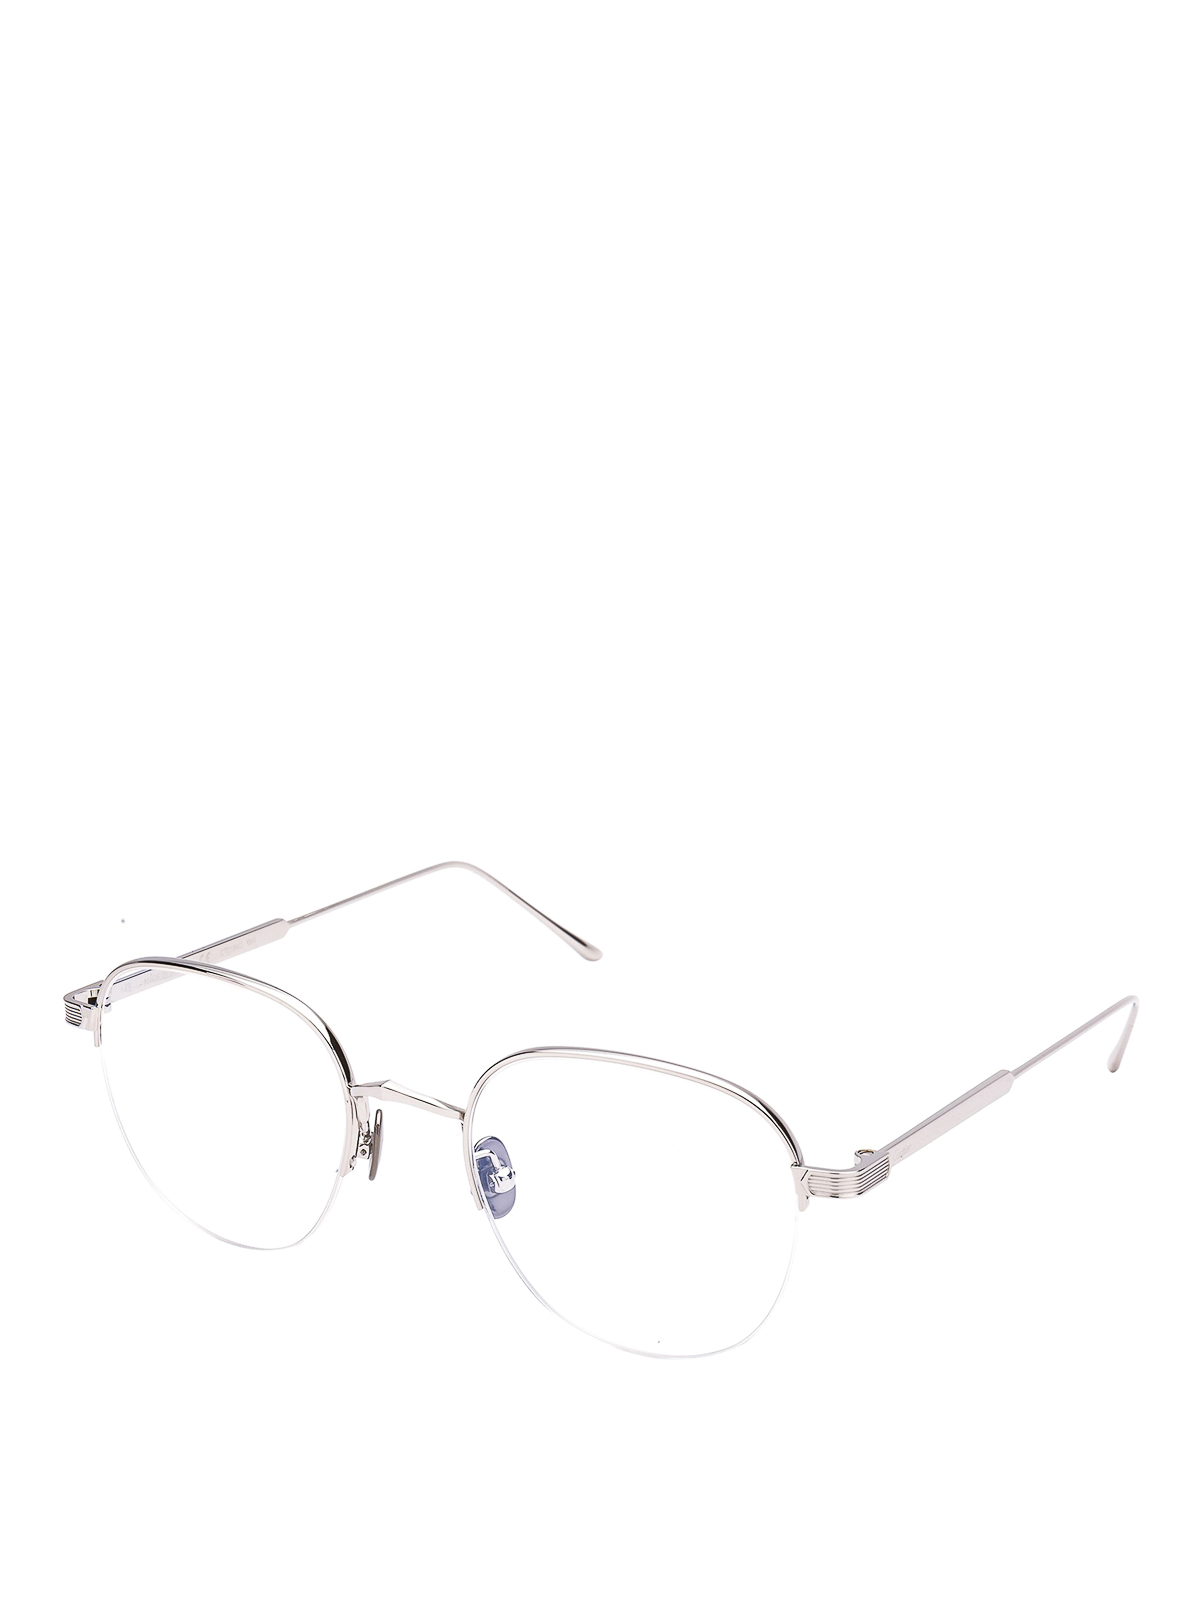 silver cartier glasses